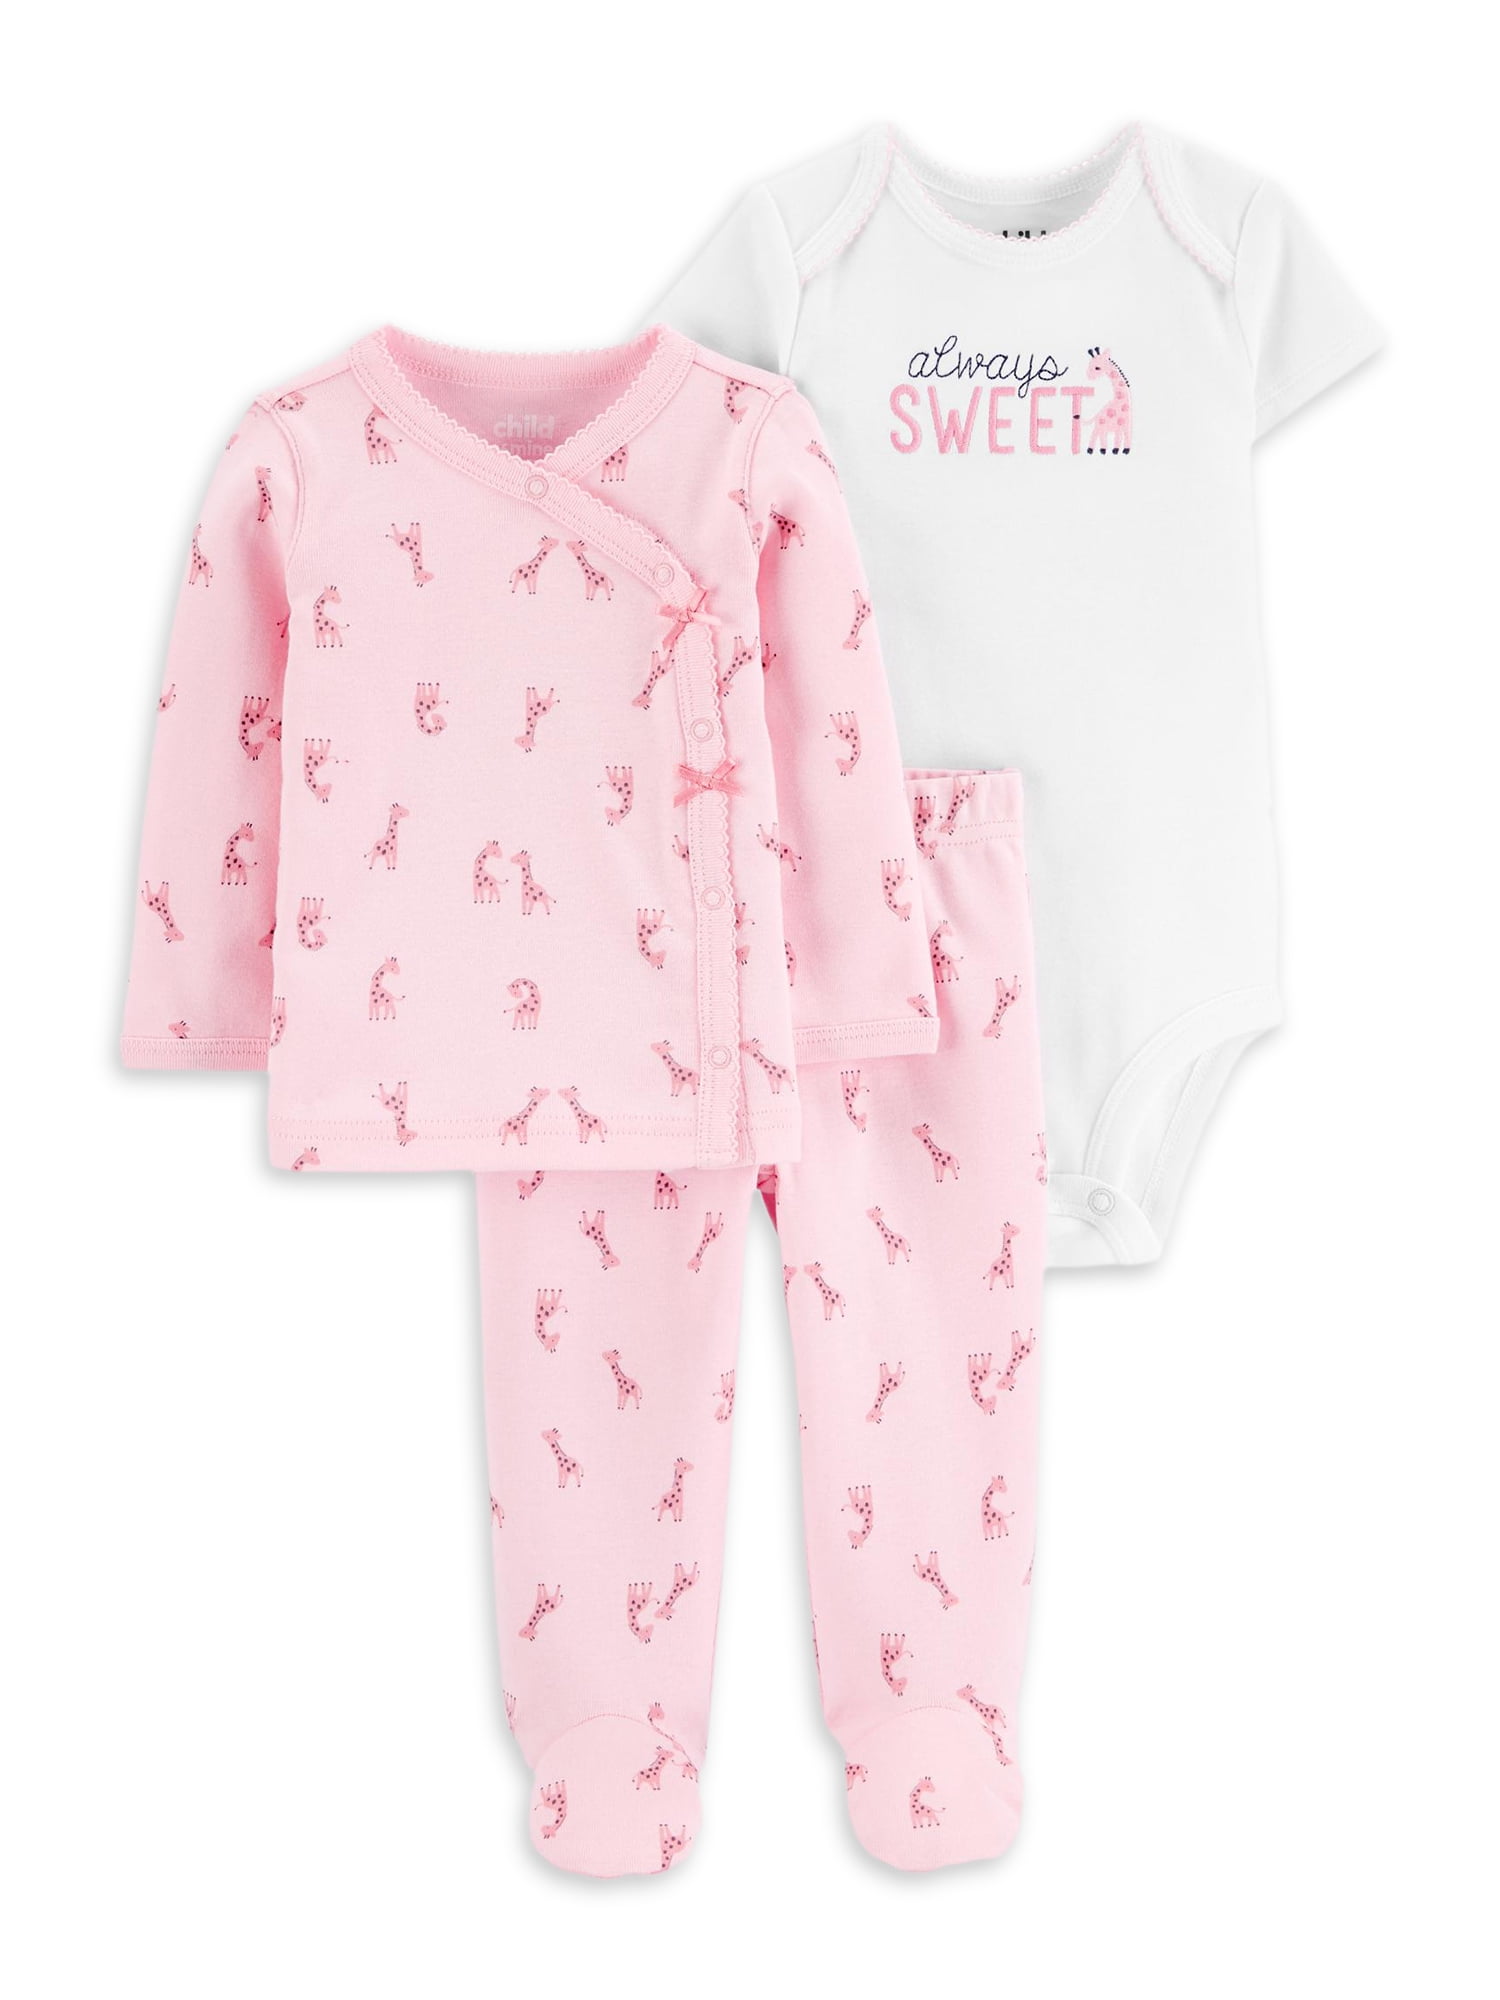 3PCS Newborn Toddler Baby Girls Outfits Clothes Hoodie Top+Pants+Headband Set Cs